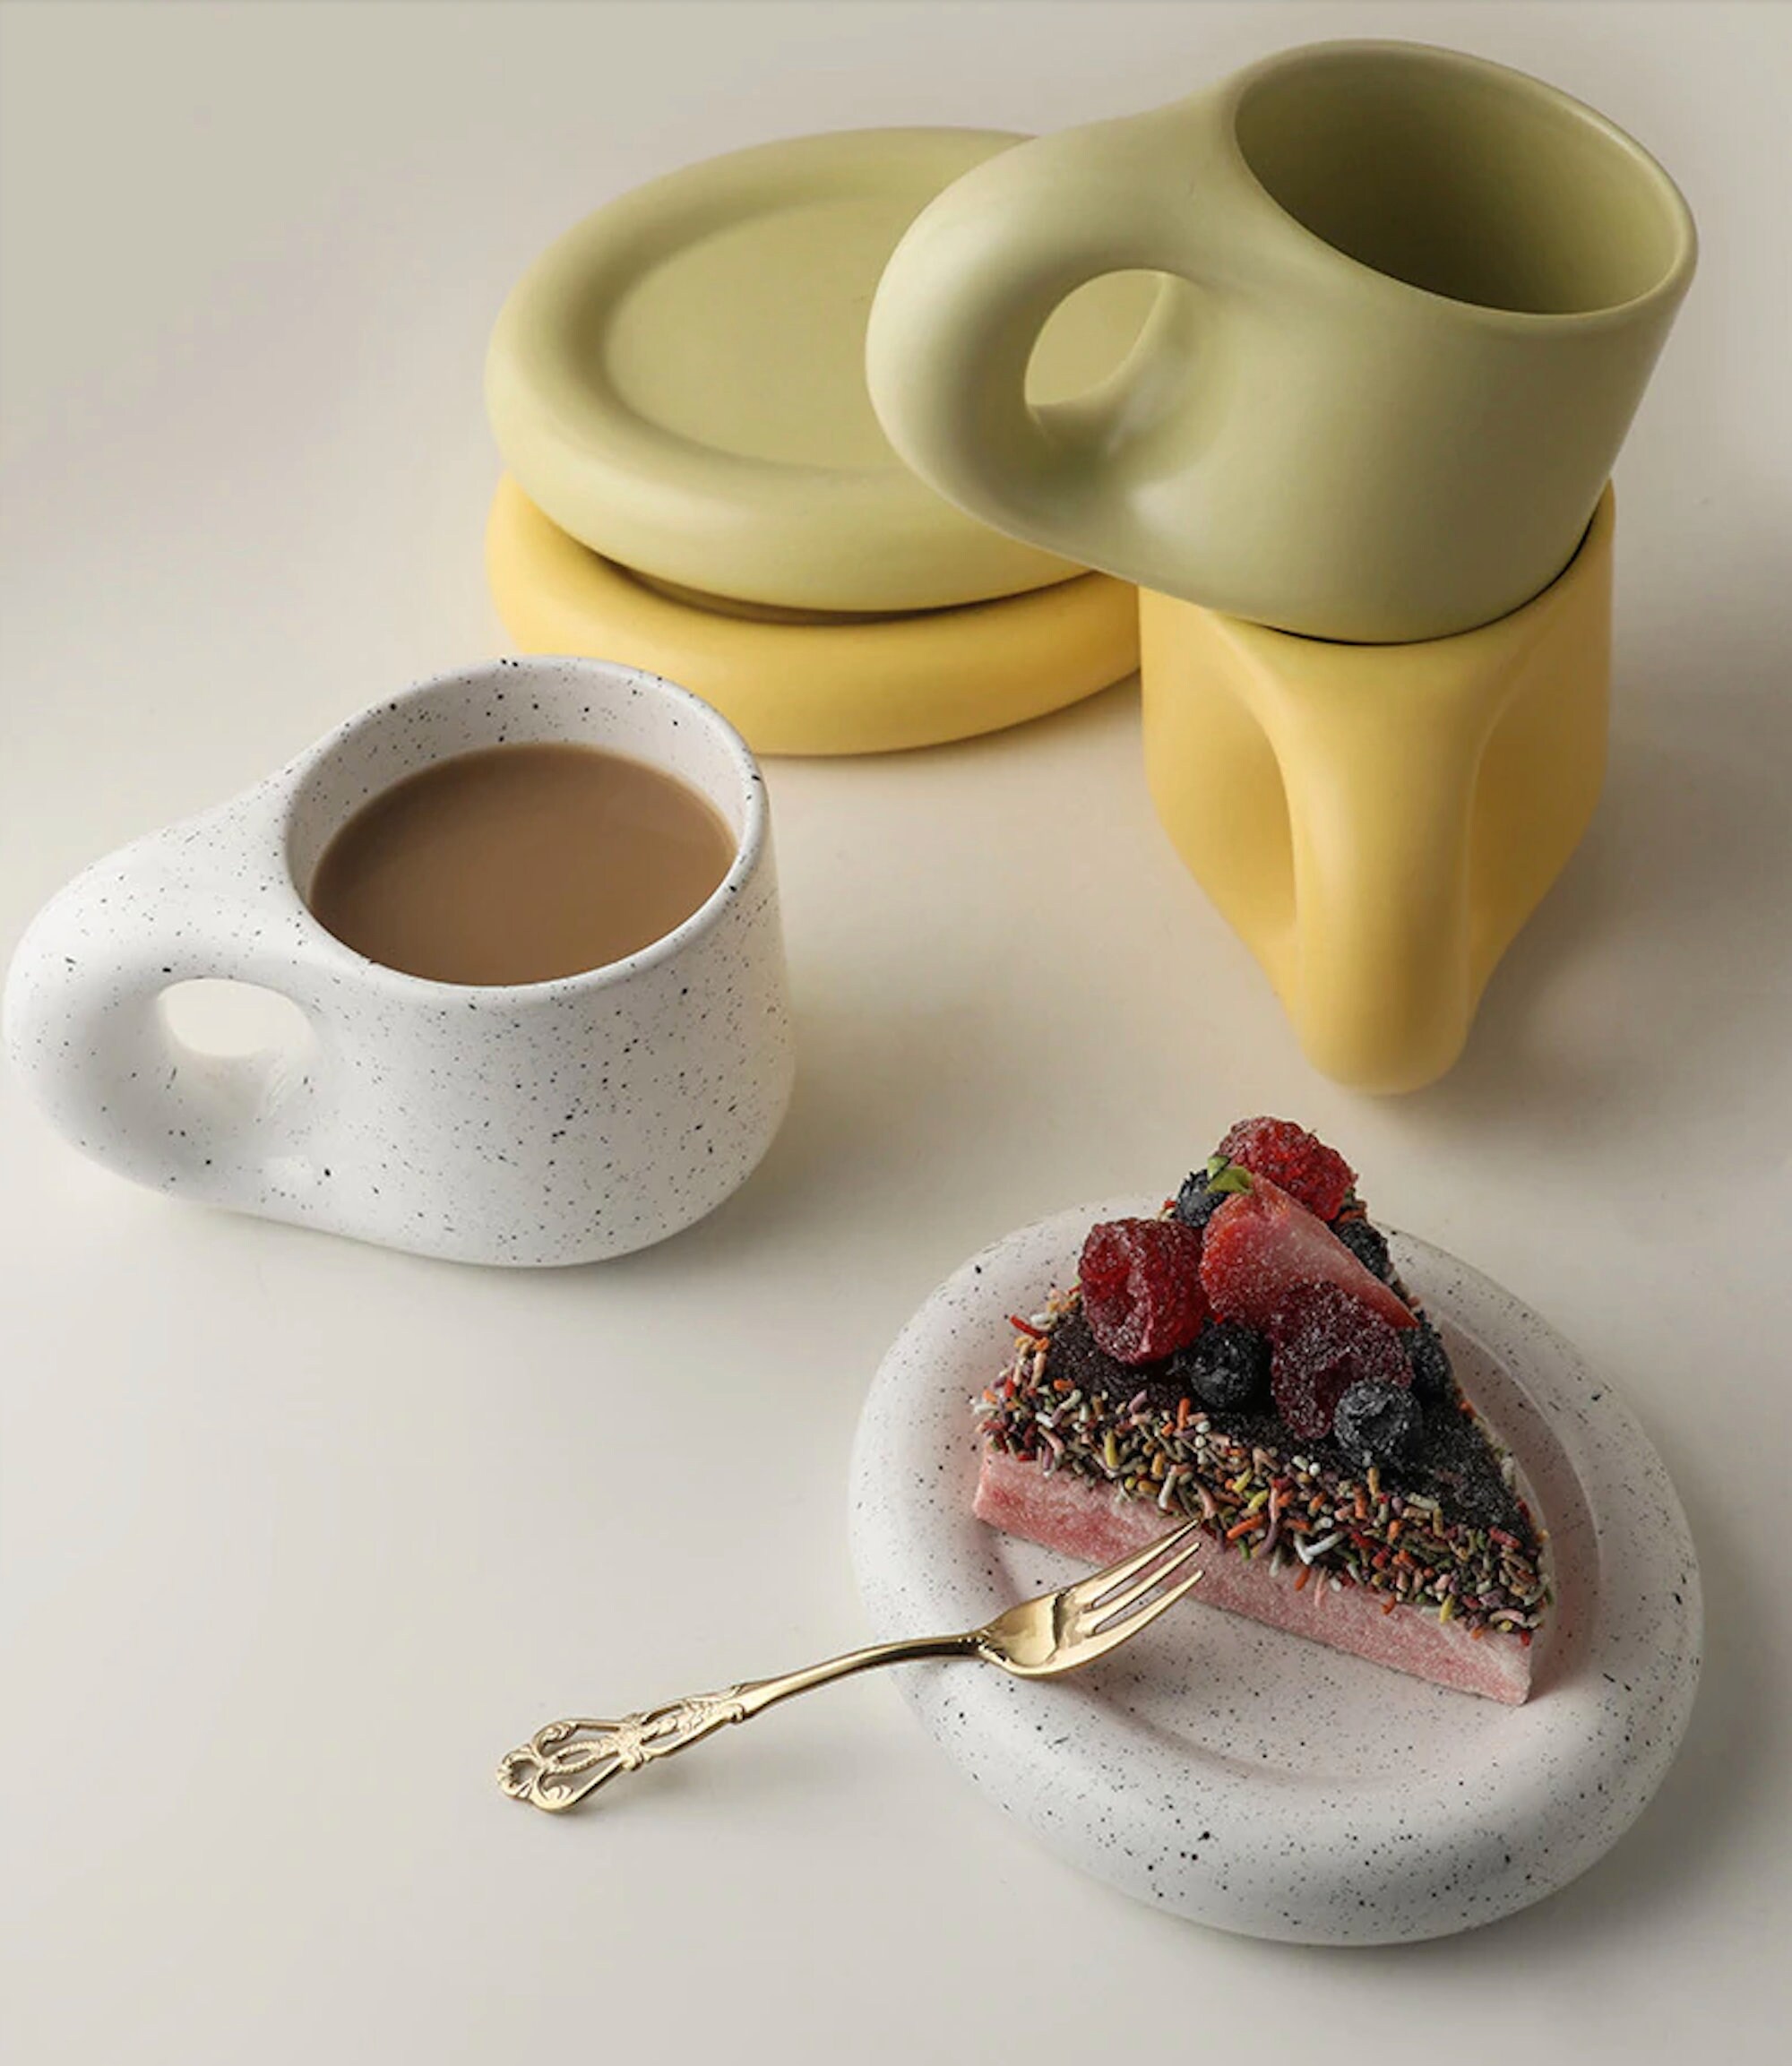 Nordic ceramic mug comes in 2 color Big Belly Mug Fat Mug